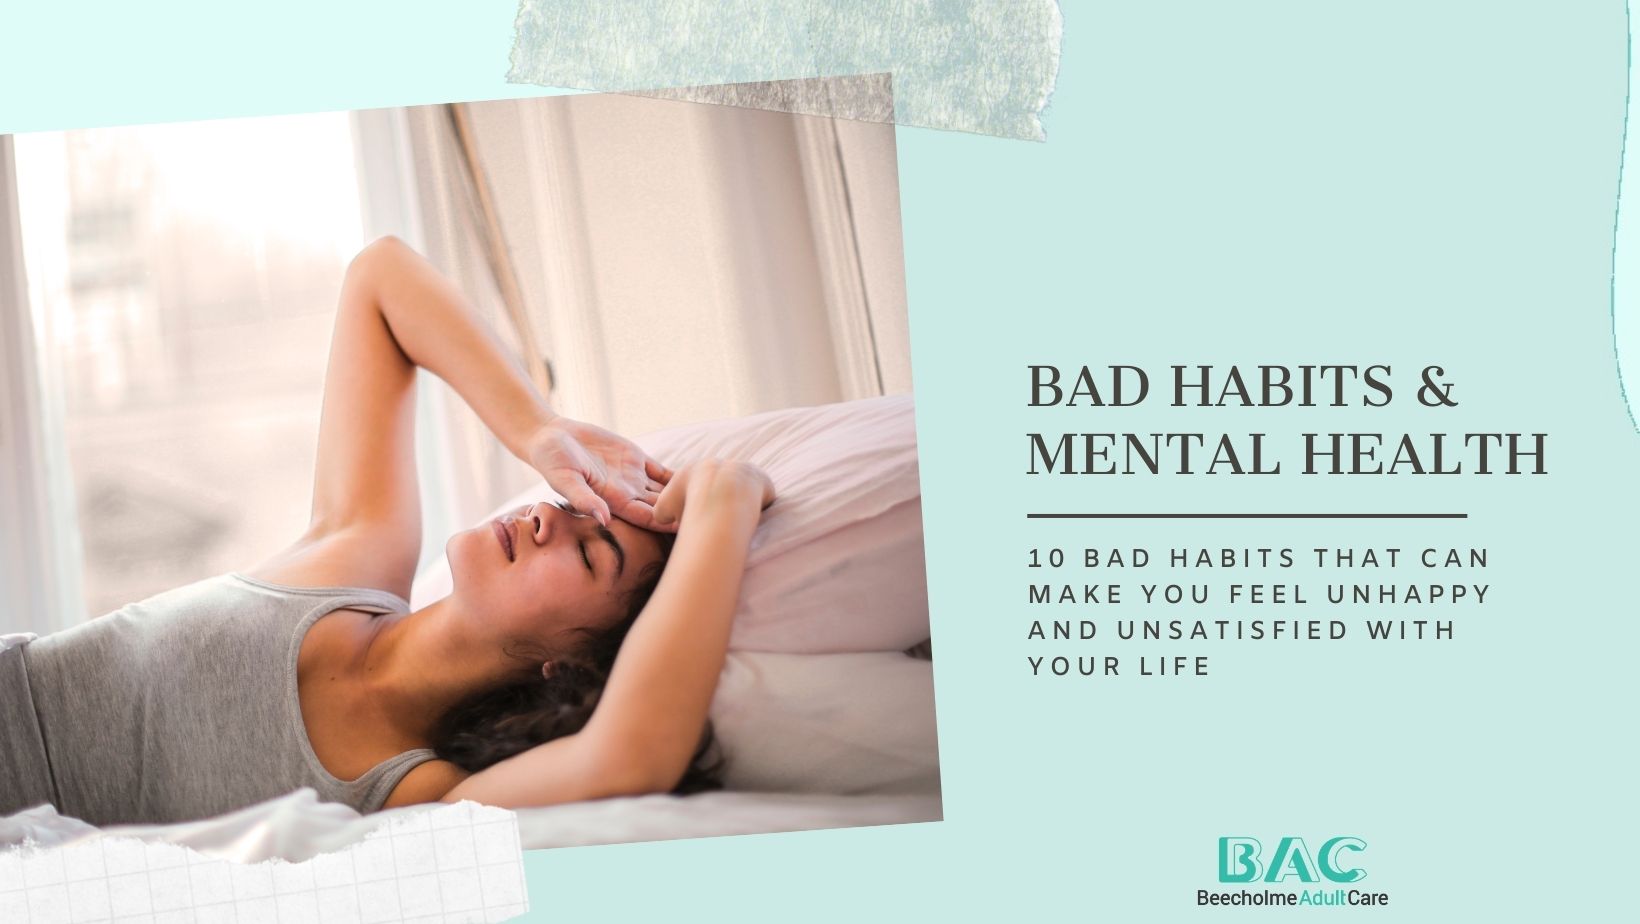 Bad habits and mental health